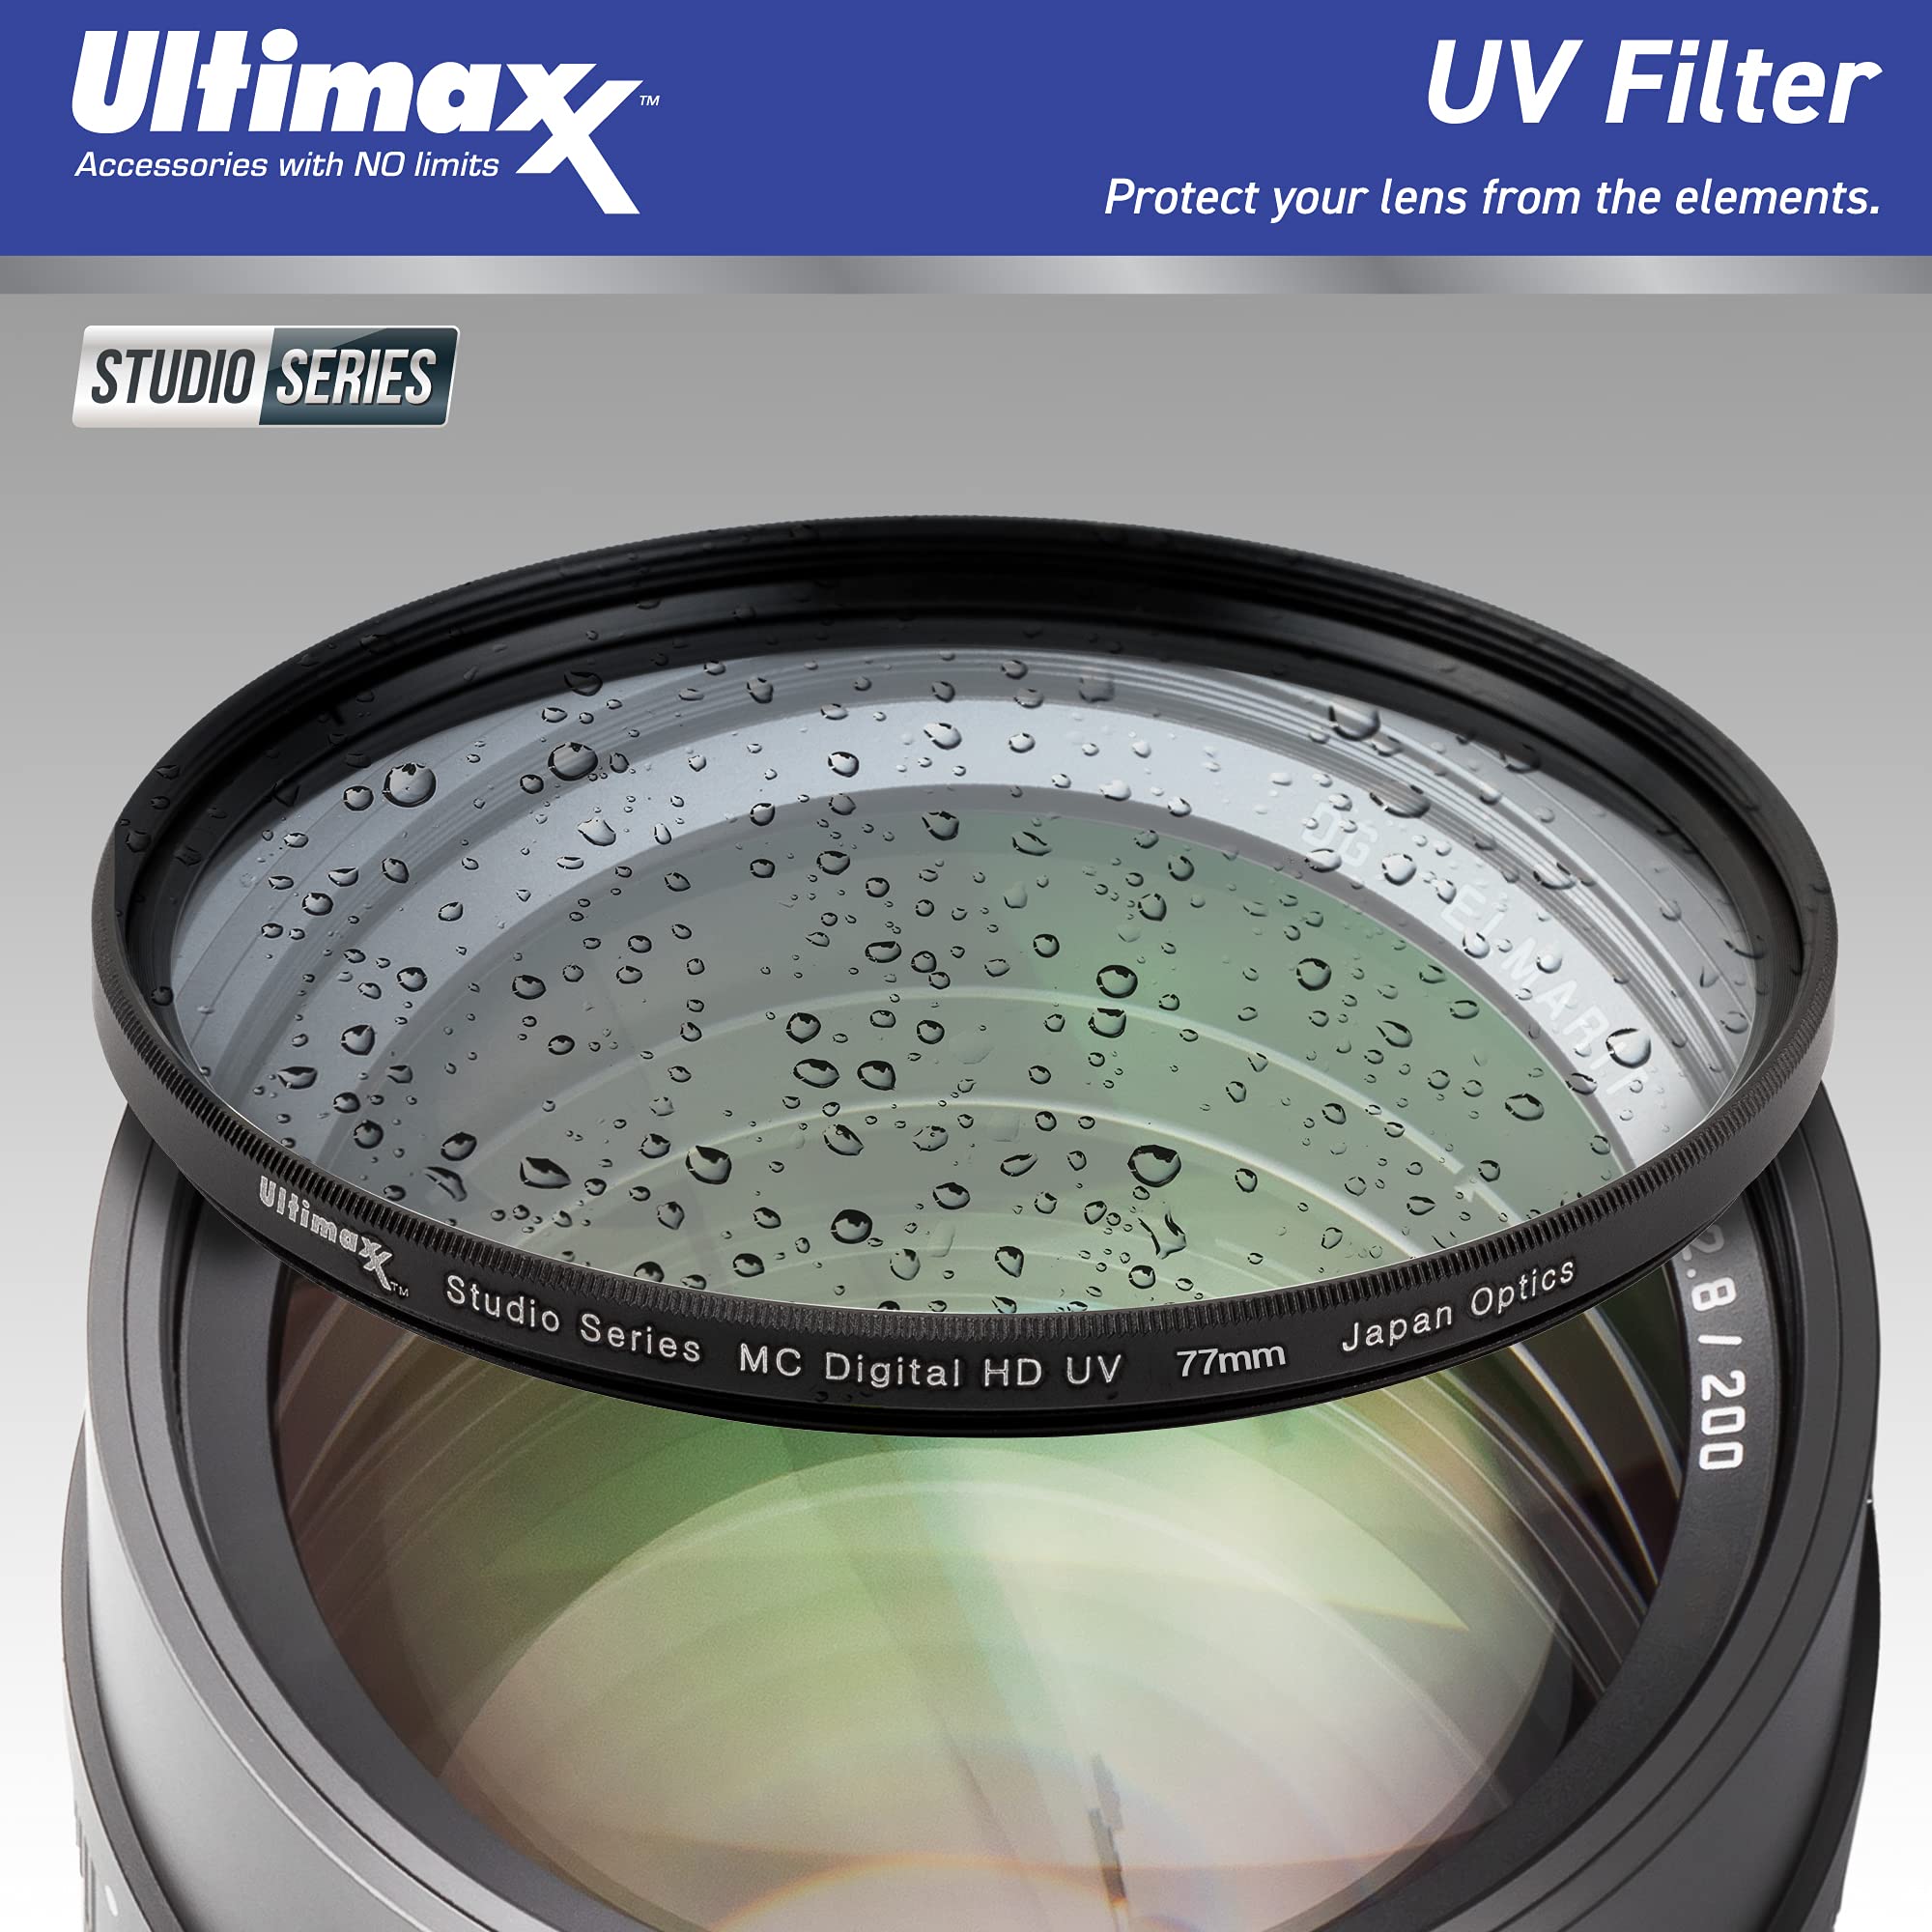 FUJIFILM X-T30 II Mirrorless Camera with 18-55mm Lens (Black) + SanDisk 64GB Ultra SDXC Memory Card, Sling Backpack, Universal Speedlite w/LED Video Light, Padded Hand/Wrist Strap & More(27pc Bundle)